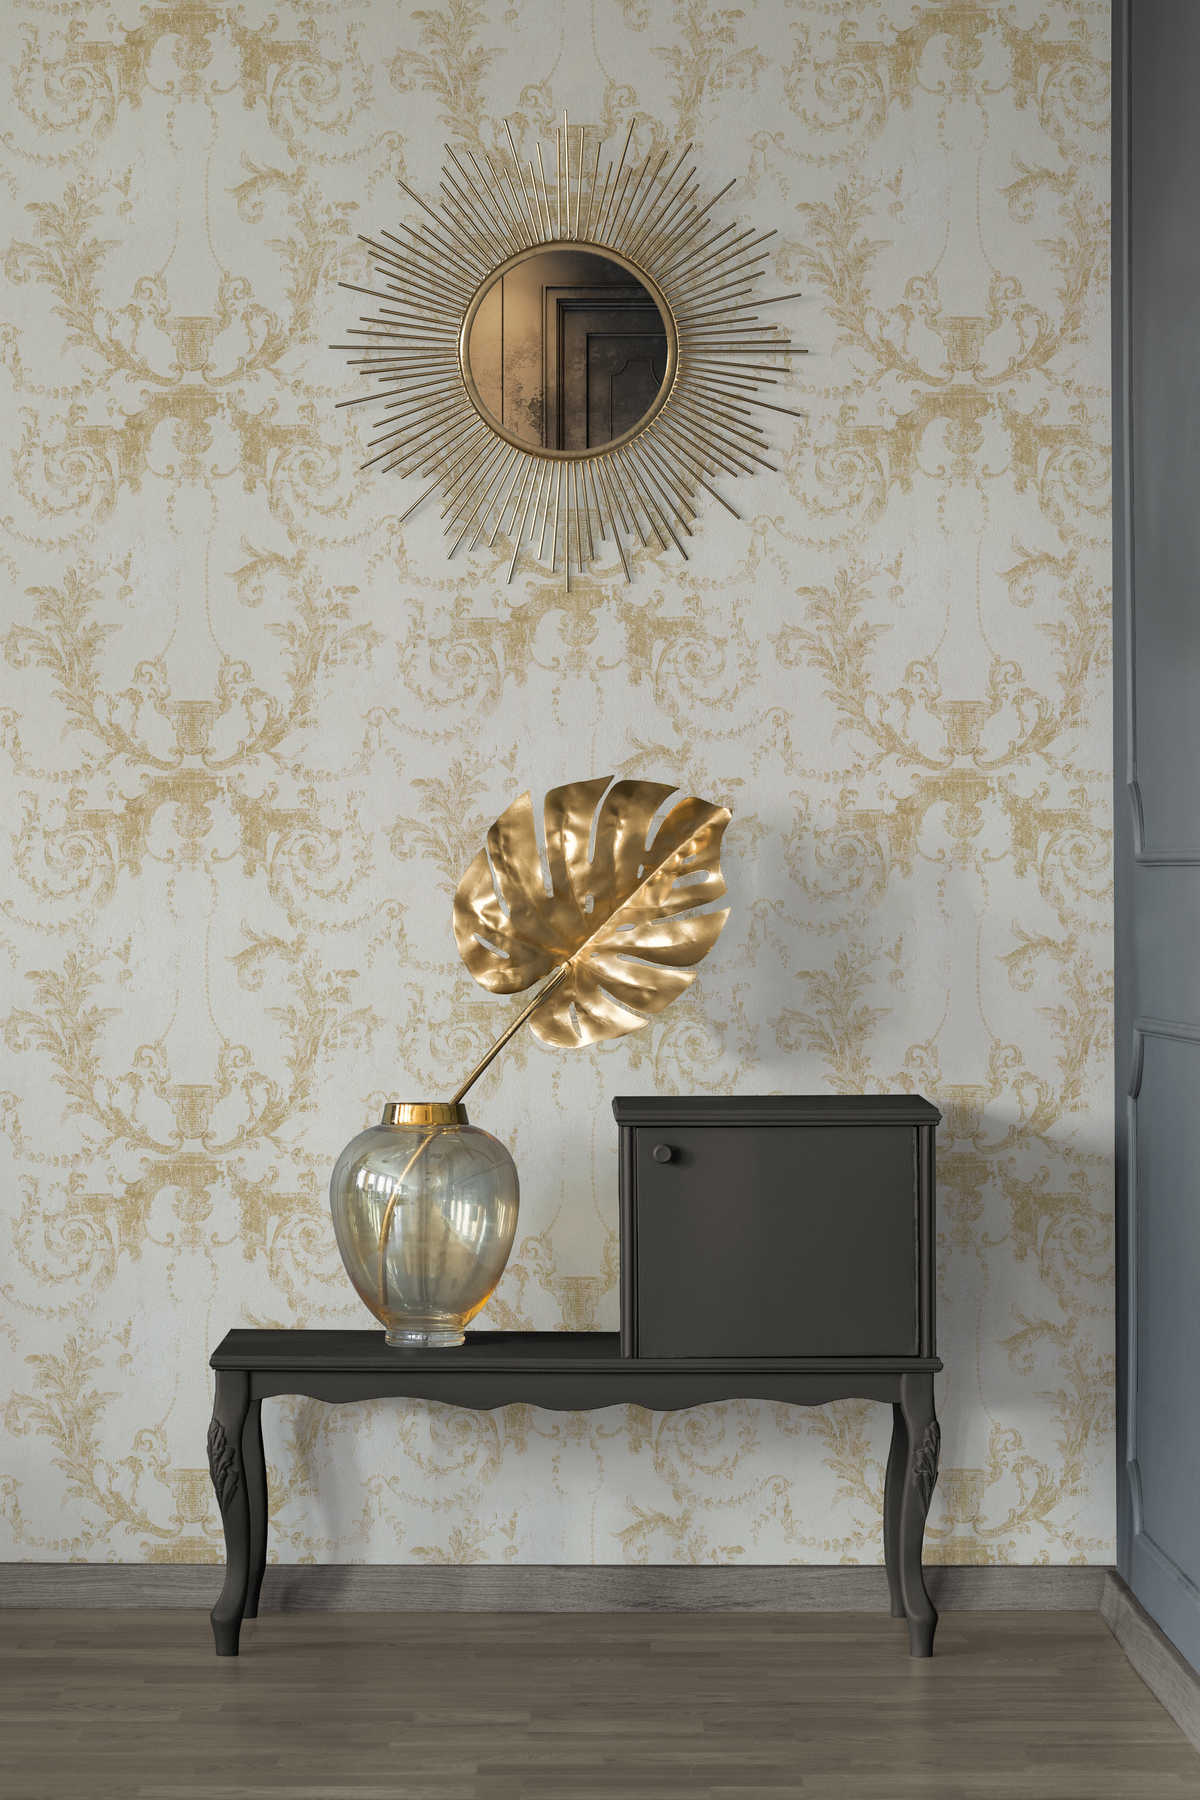             Ornament wallpaper vintage style & rustic - gold, cream
        